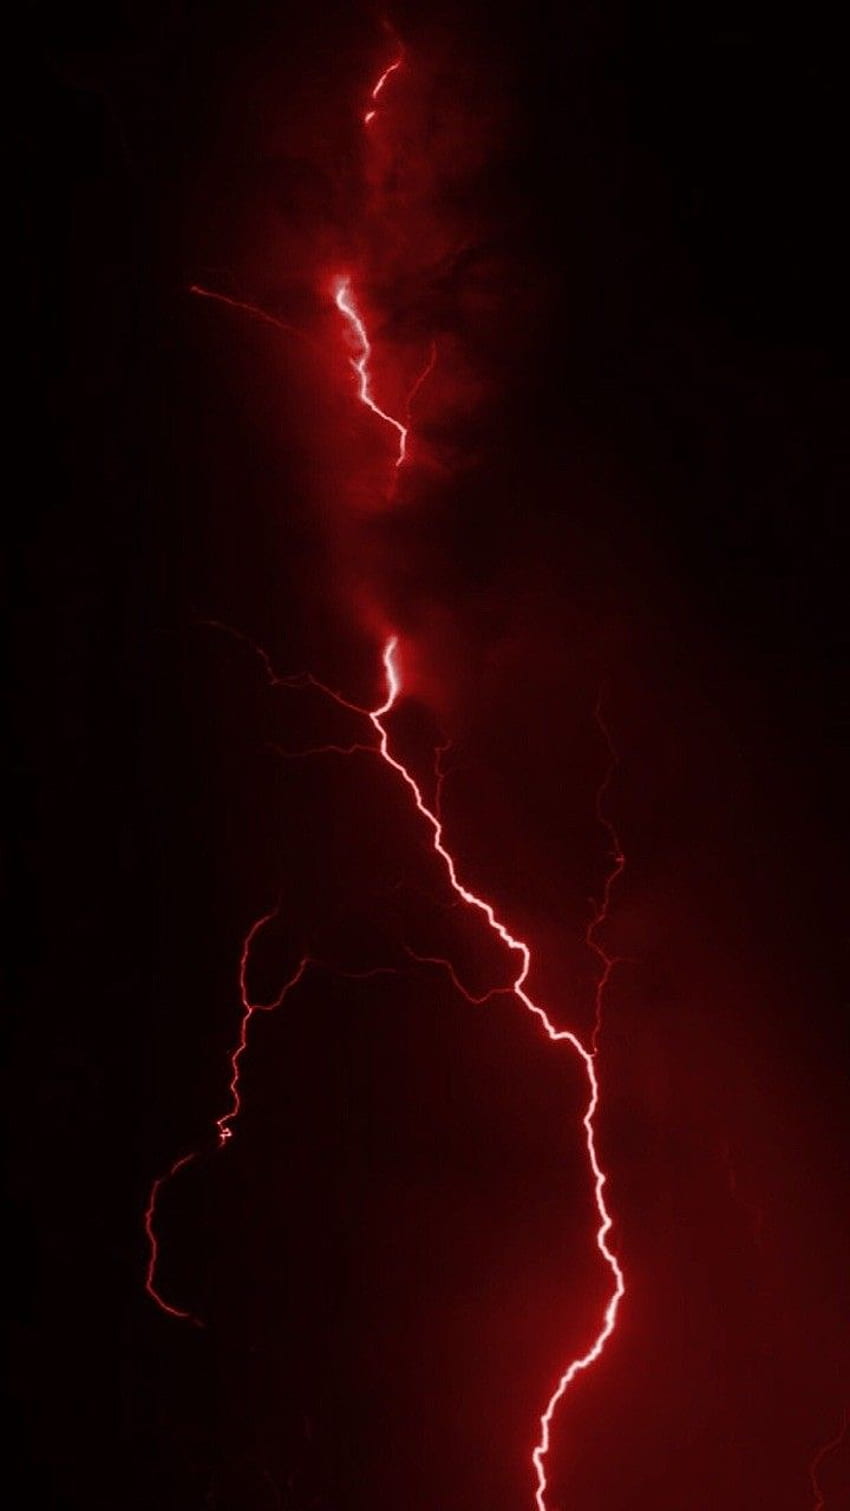 Wallpaper Cloud Lightning Atmosphere Thunder Water Background   Download Free Image